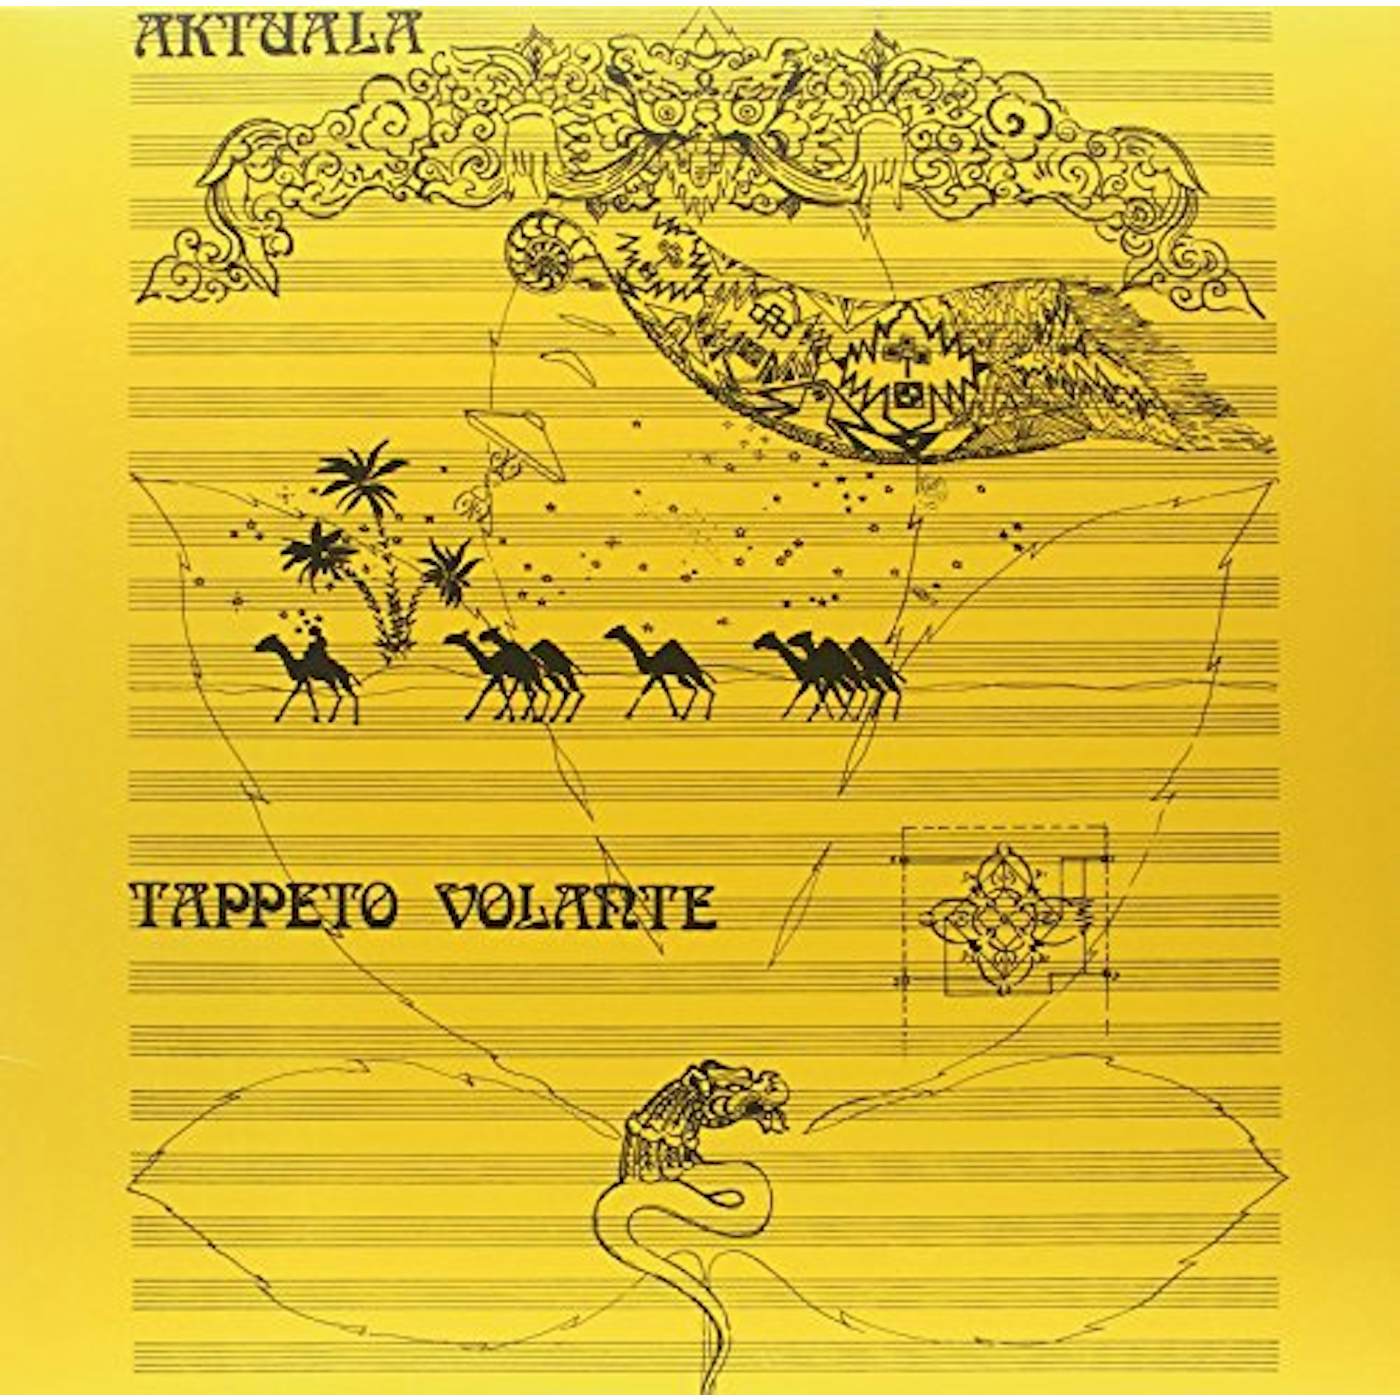 Aktuala Tappeto volante Vinyl Record